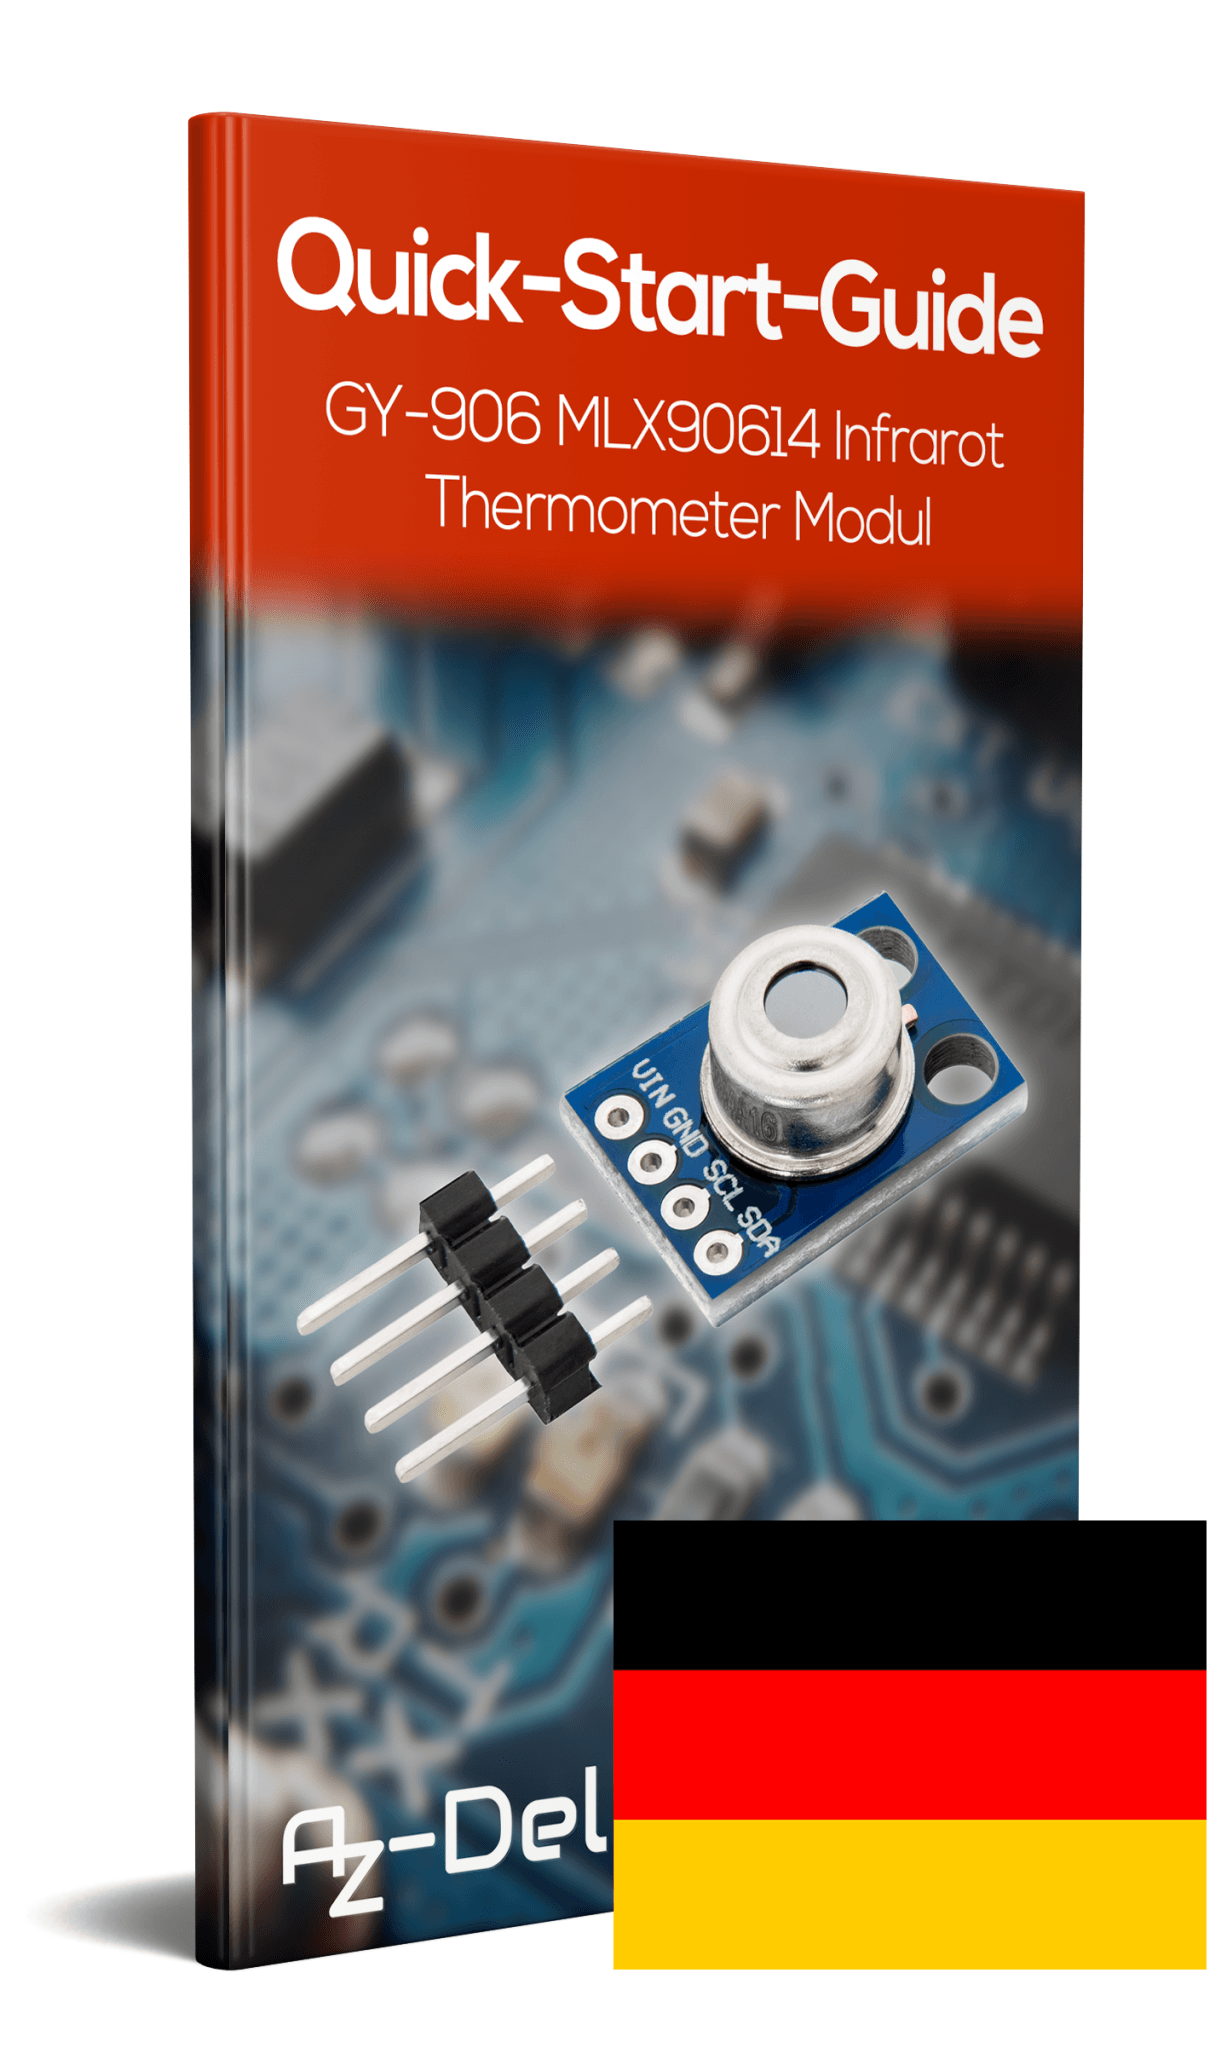 GY-906 MLX90614 Infrarot Thermometer Modul IR Temperatursensor - AZ-Delivery